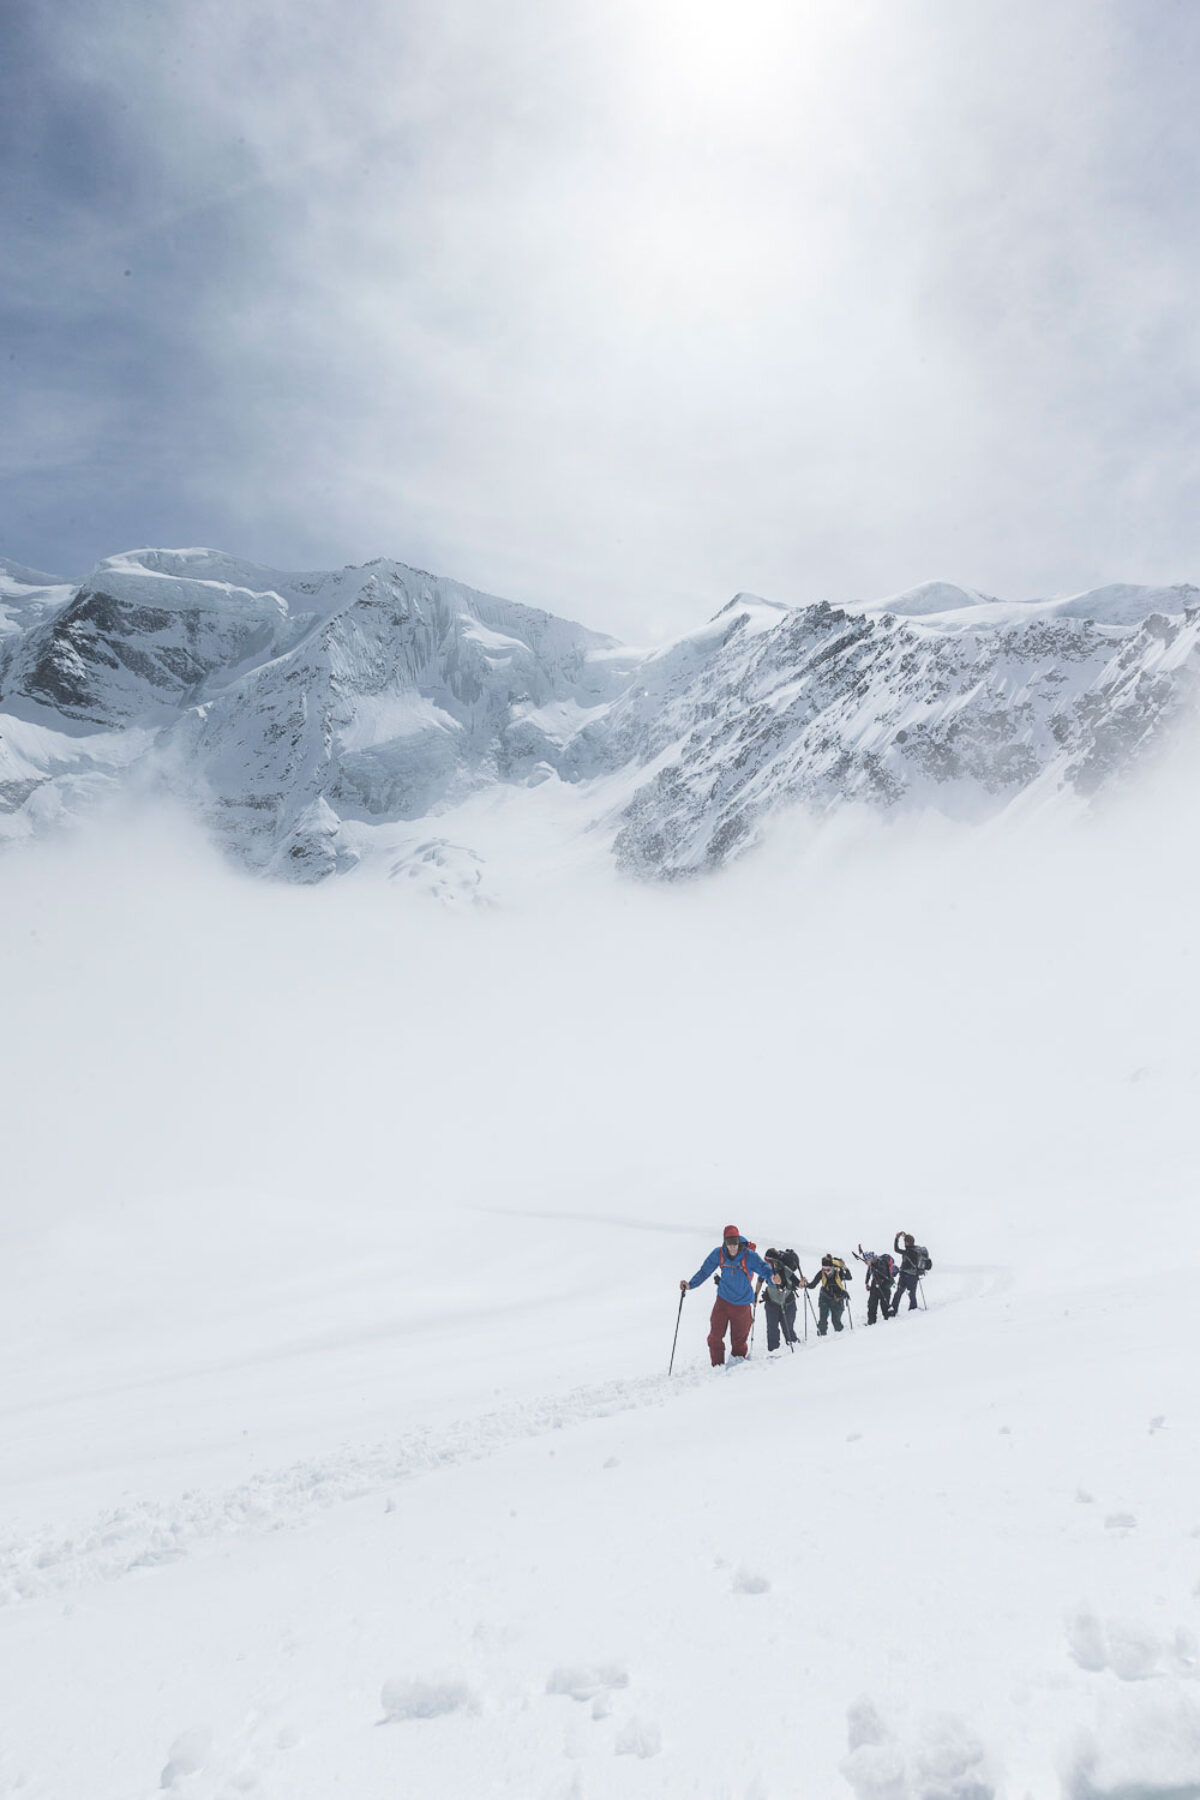 Hotel Hauser St. Moritz - Upper Engadine surroundings Winter activities - Ski tours